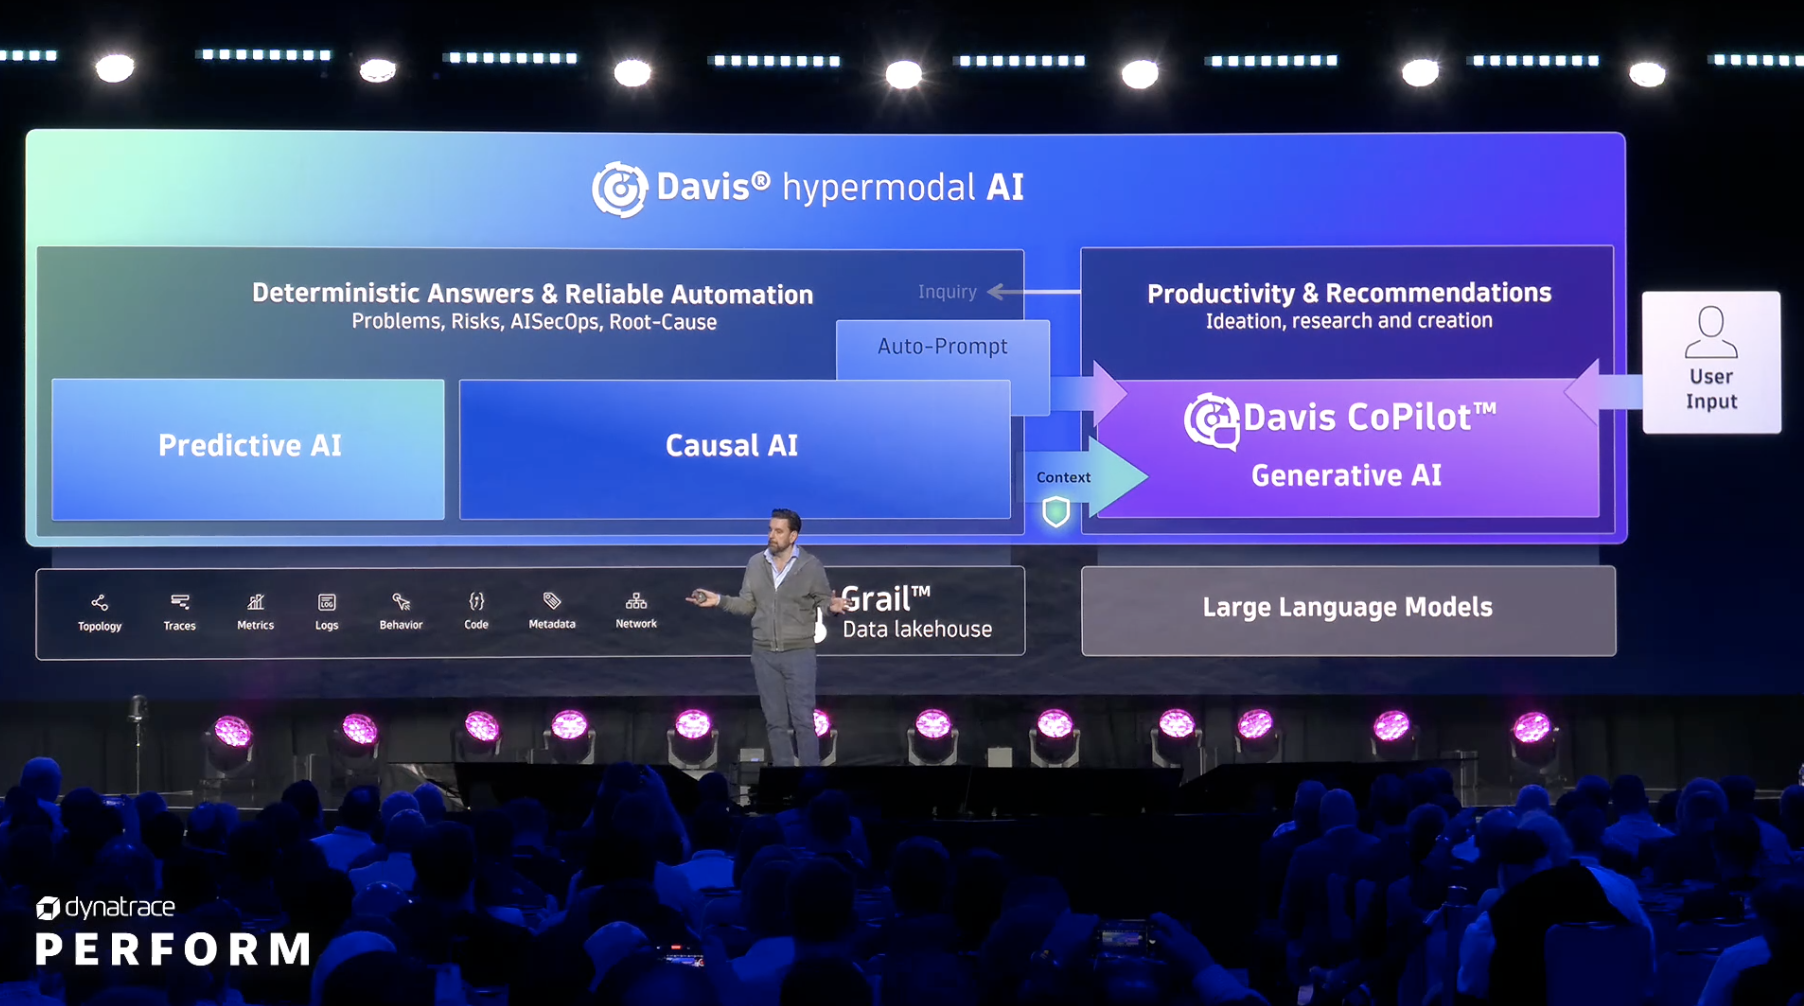 Davis hypermodal AI combines predictive, causal, and generative capabilities for all AI use cases